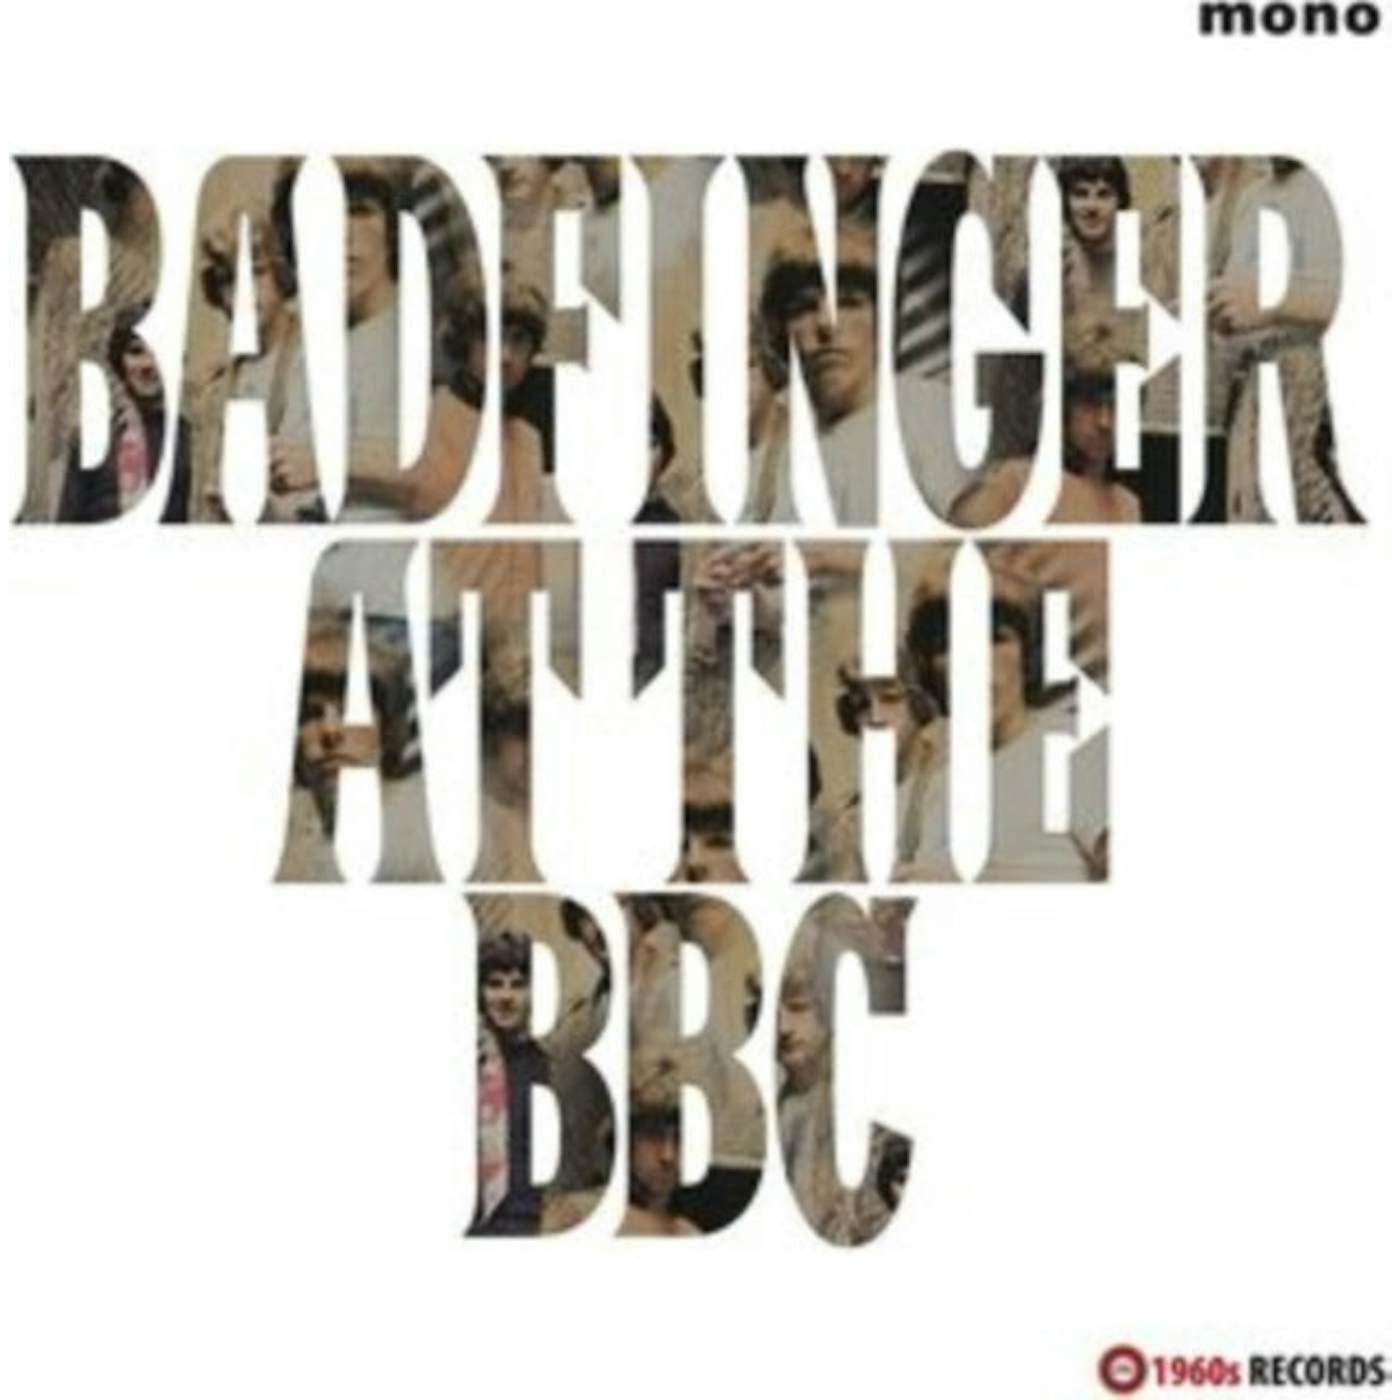 Badfinger LP Vinyl Record  Badfinger At The BBC 19 6919 70